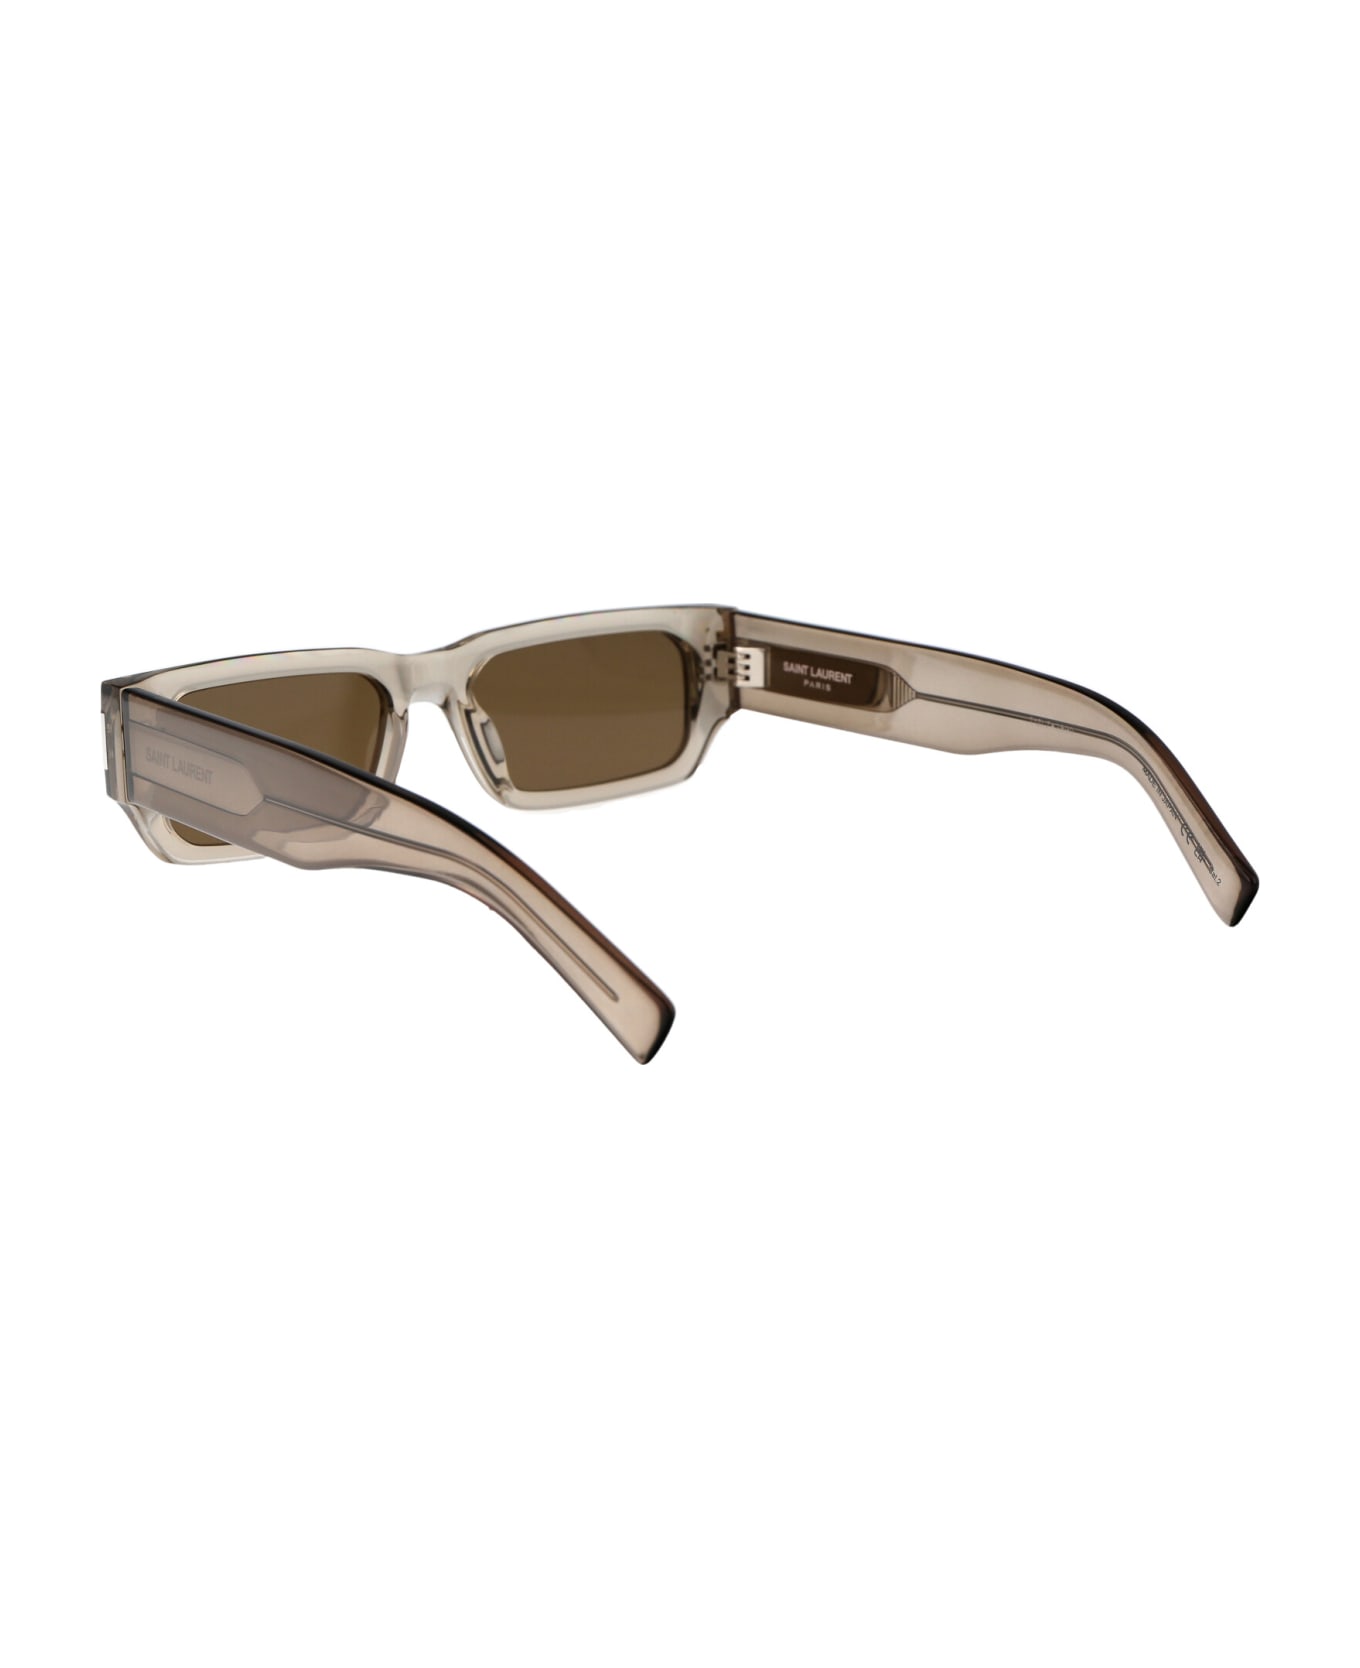 Saint Laurent Eyewear Sl 660 Sunglasses - 004 BEIGE BEIGE BROWN